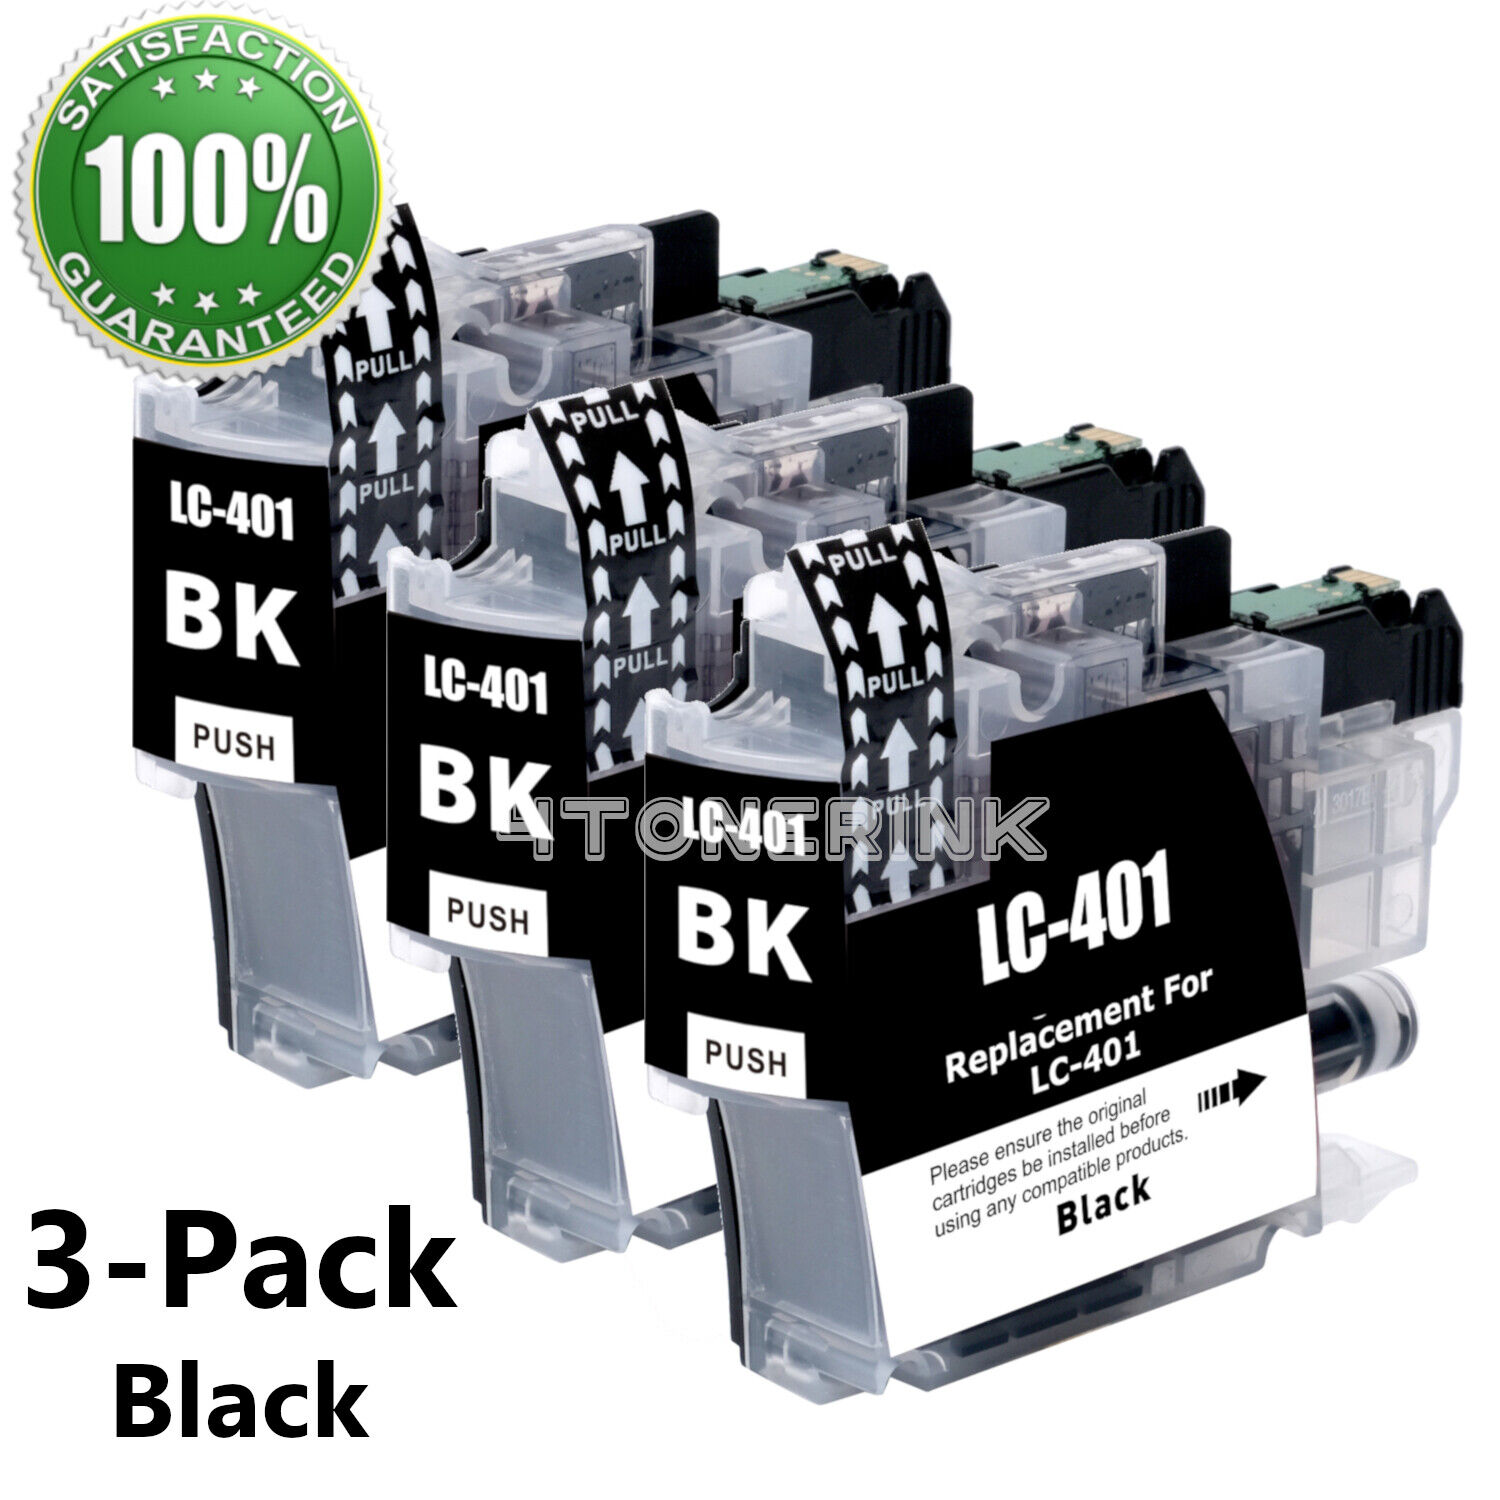 3PK LC401 Black Ink Cartridges for Brother MFC-J1010DW MFC-J1012DW MFC-J1170DW